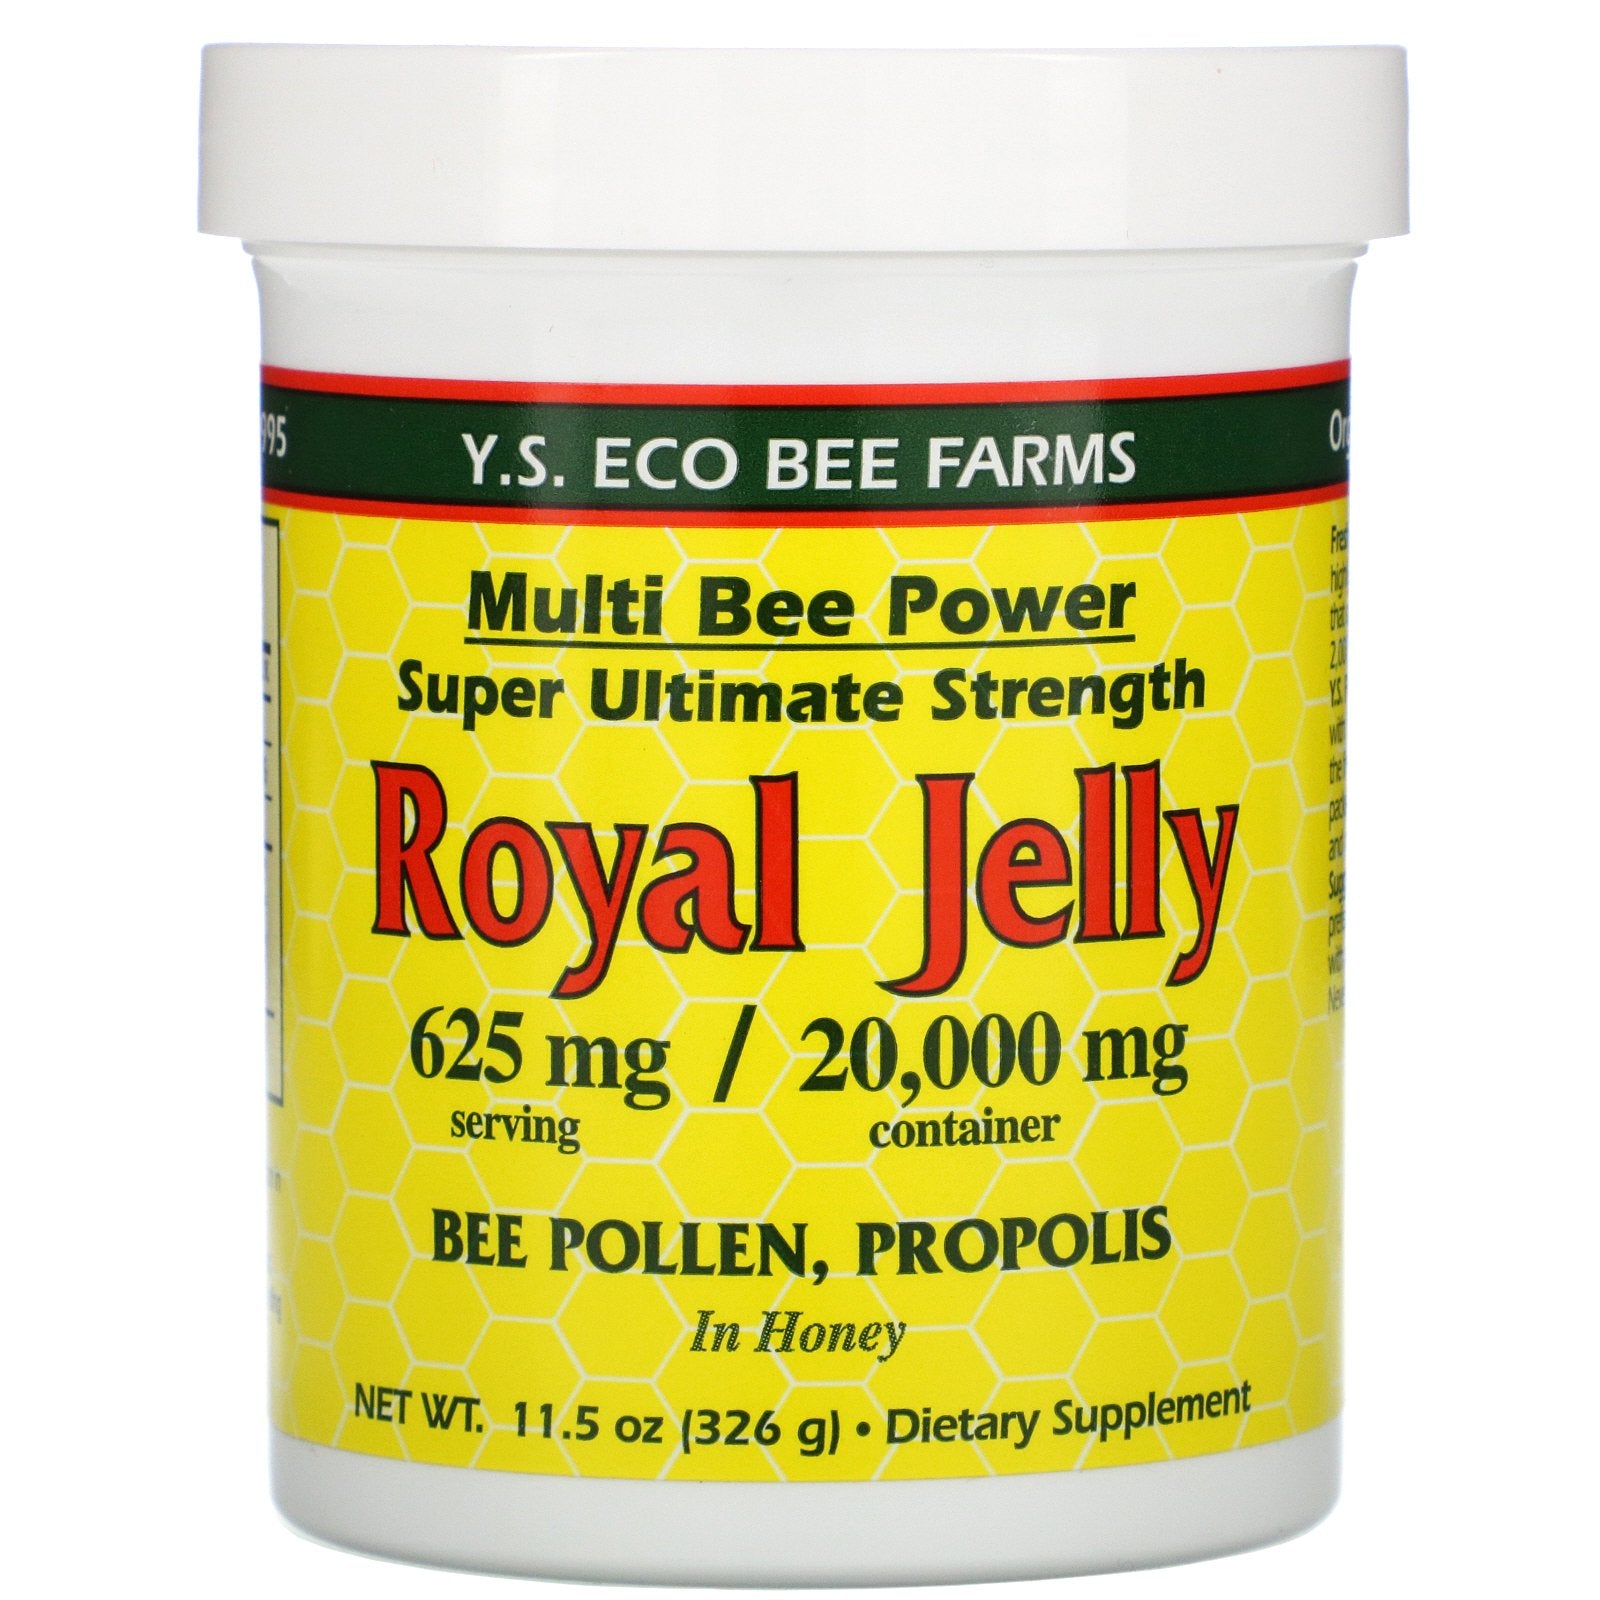 Y.S. Eco Bee Farms, Royal Jelly, 625 mg